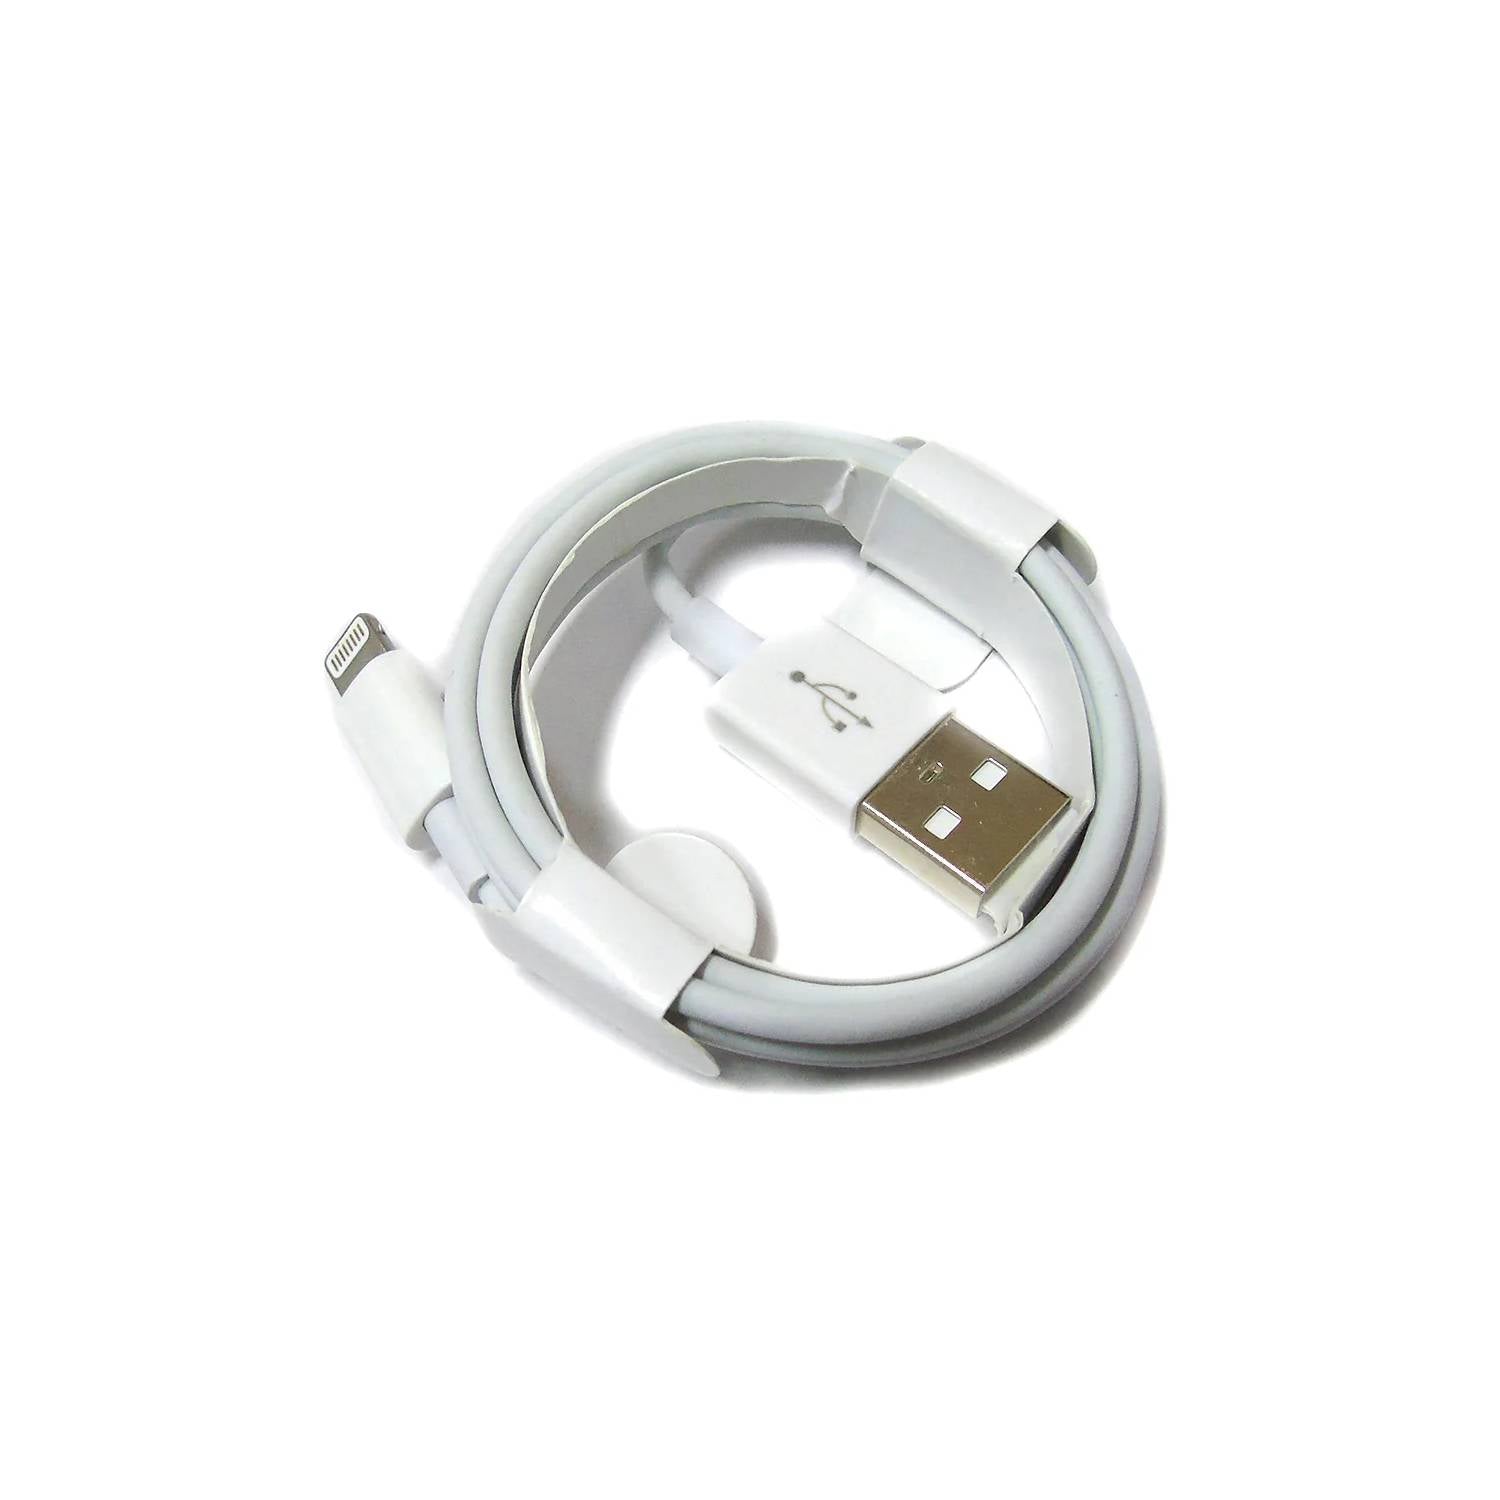 Fonemax Cable Data MFI USB-A a Lightning Blanco 1M